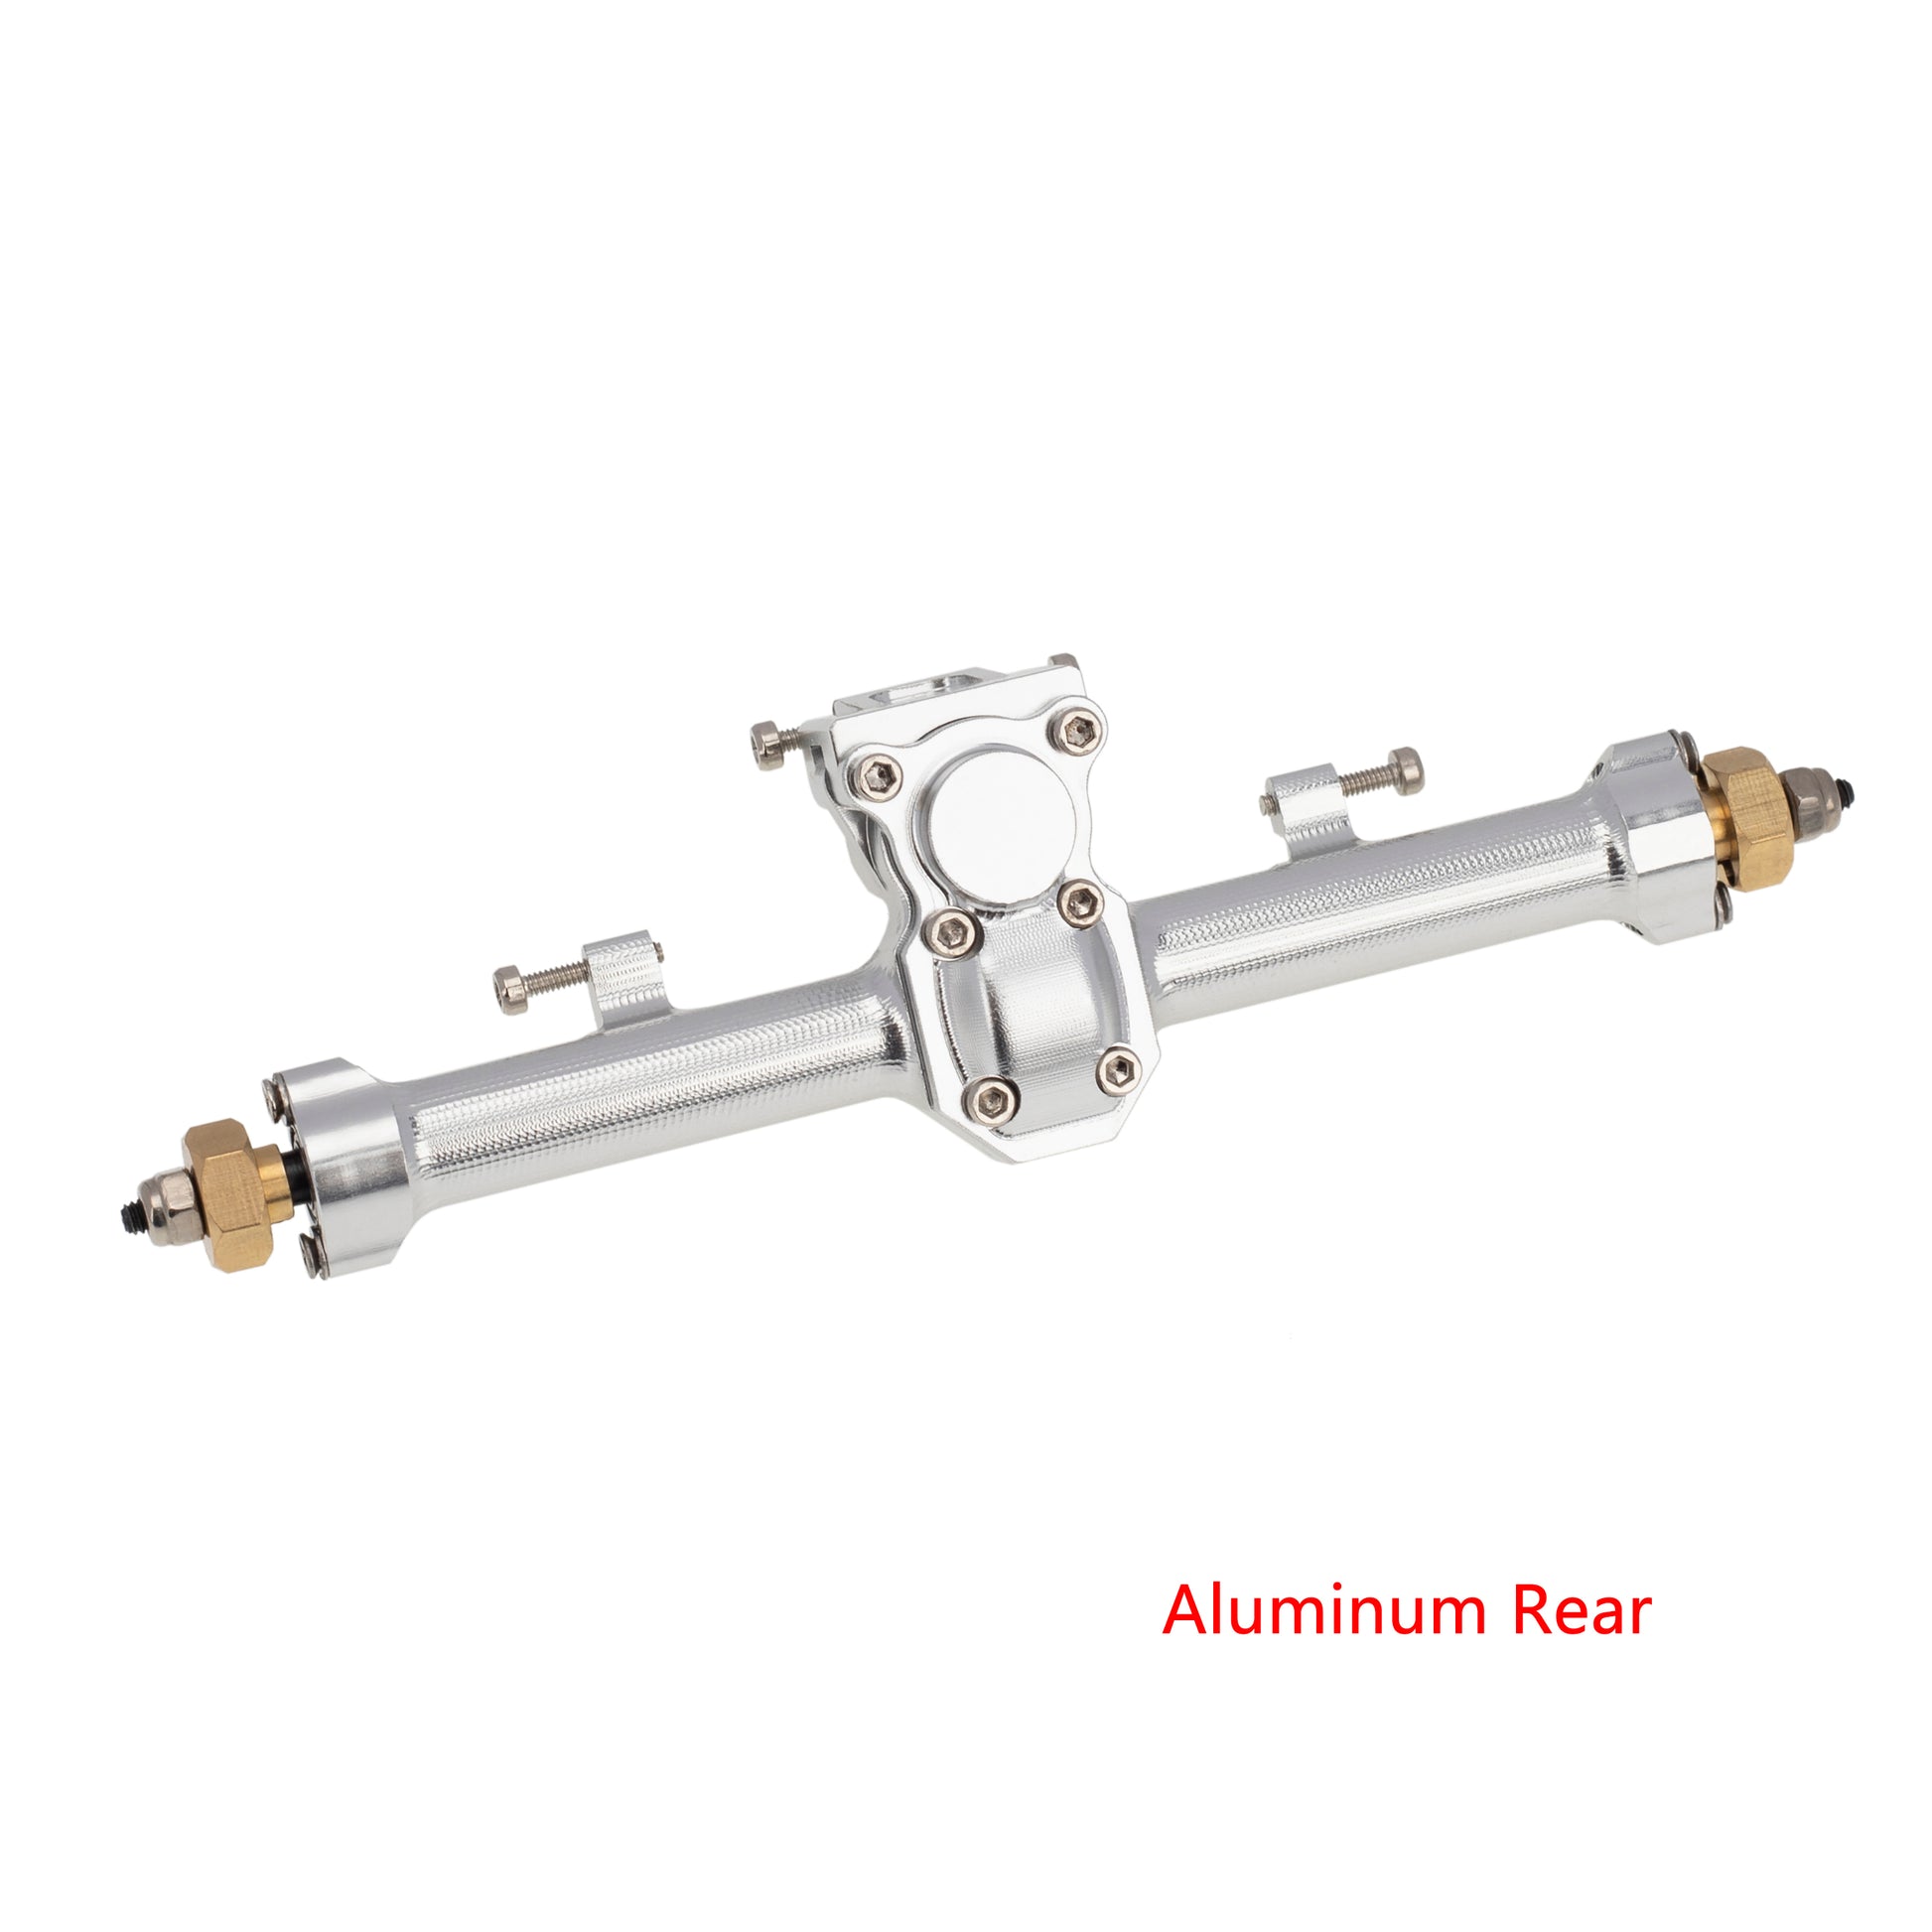 Aluminum Rear Axle for Axial SCX24 silver